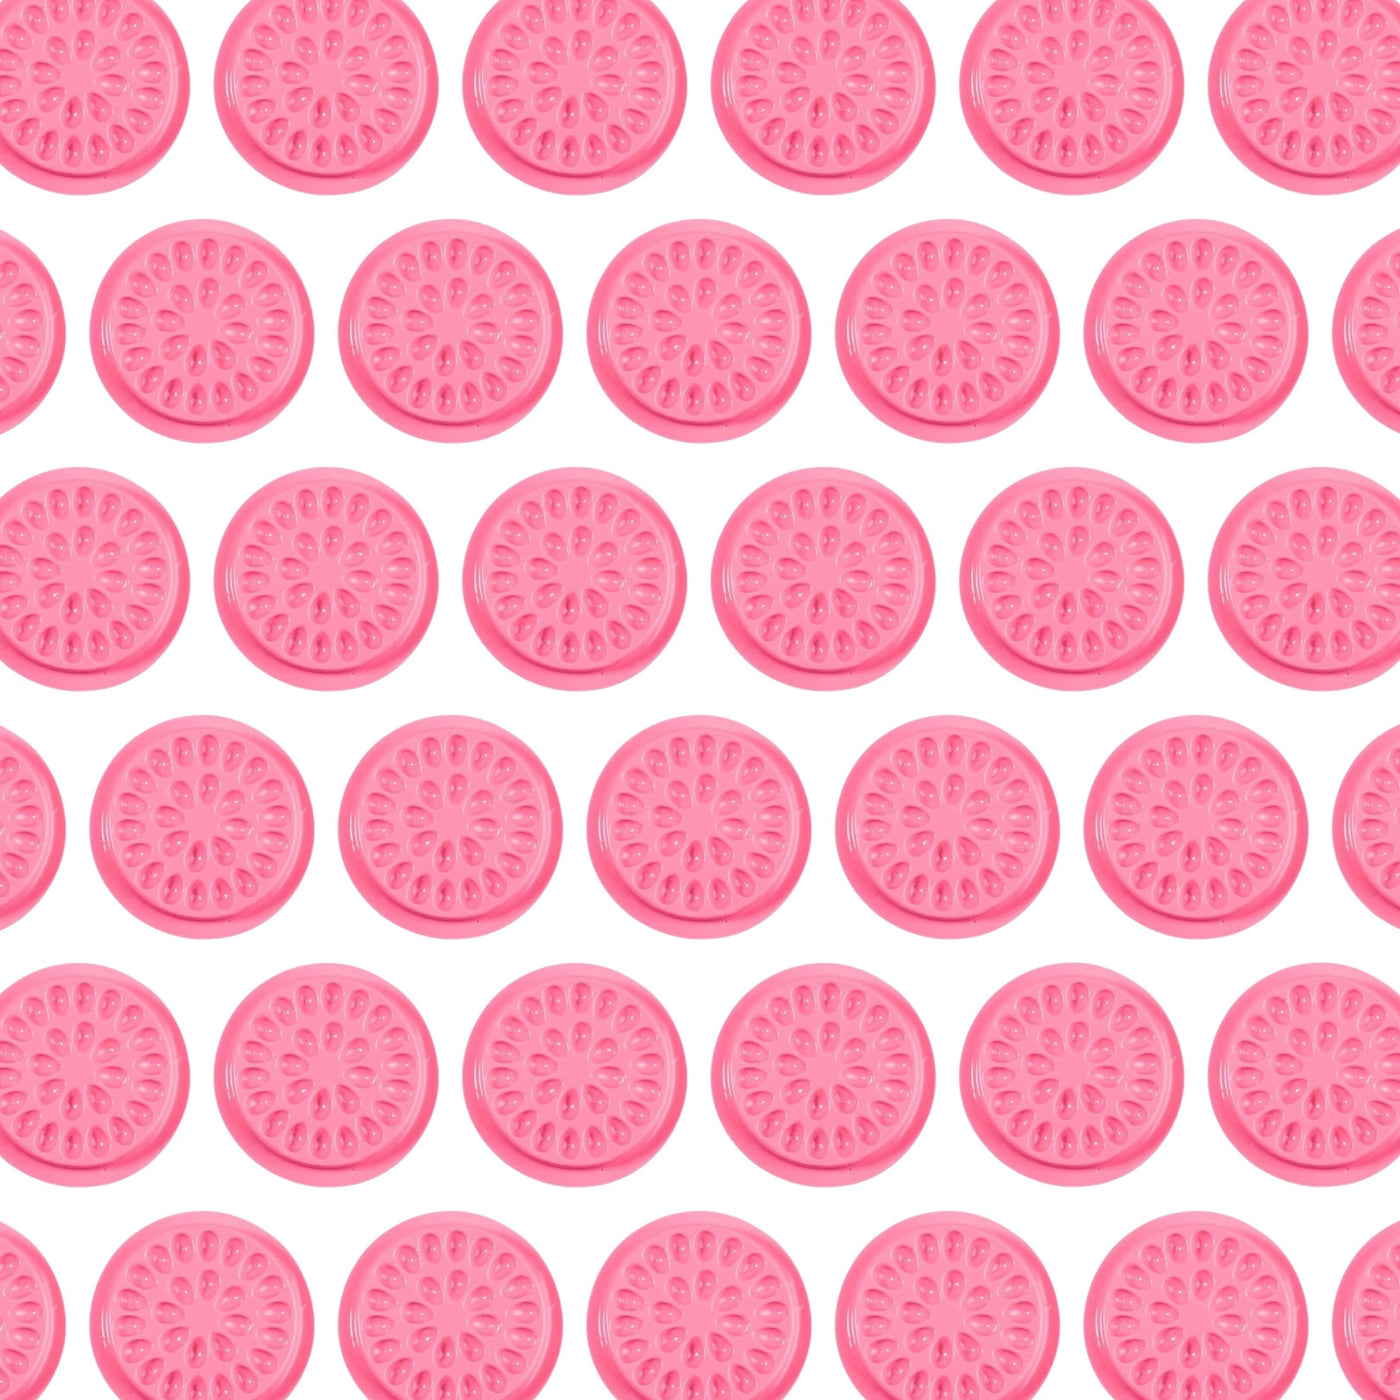 Pink glue adhesive well Flowrish Lashes